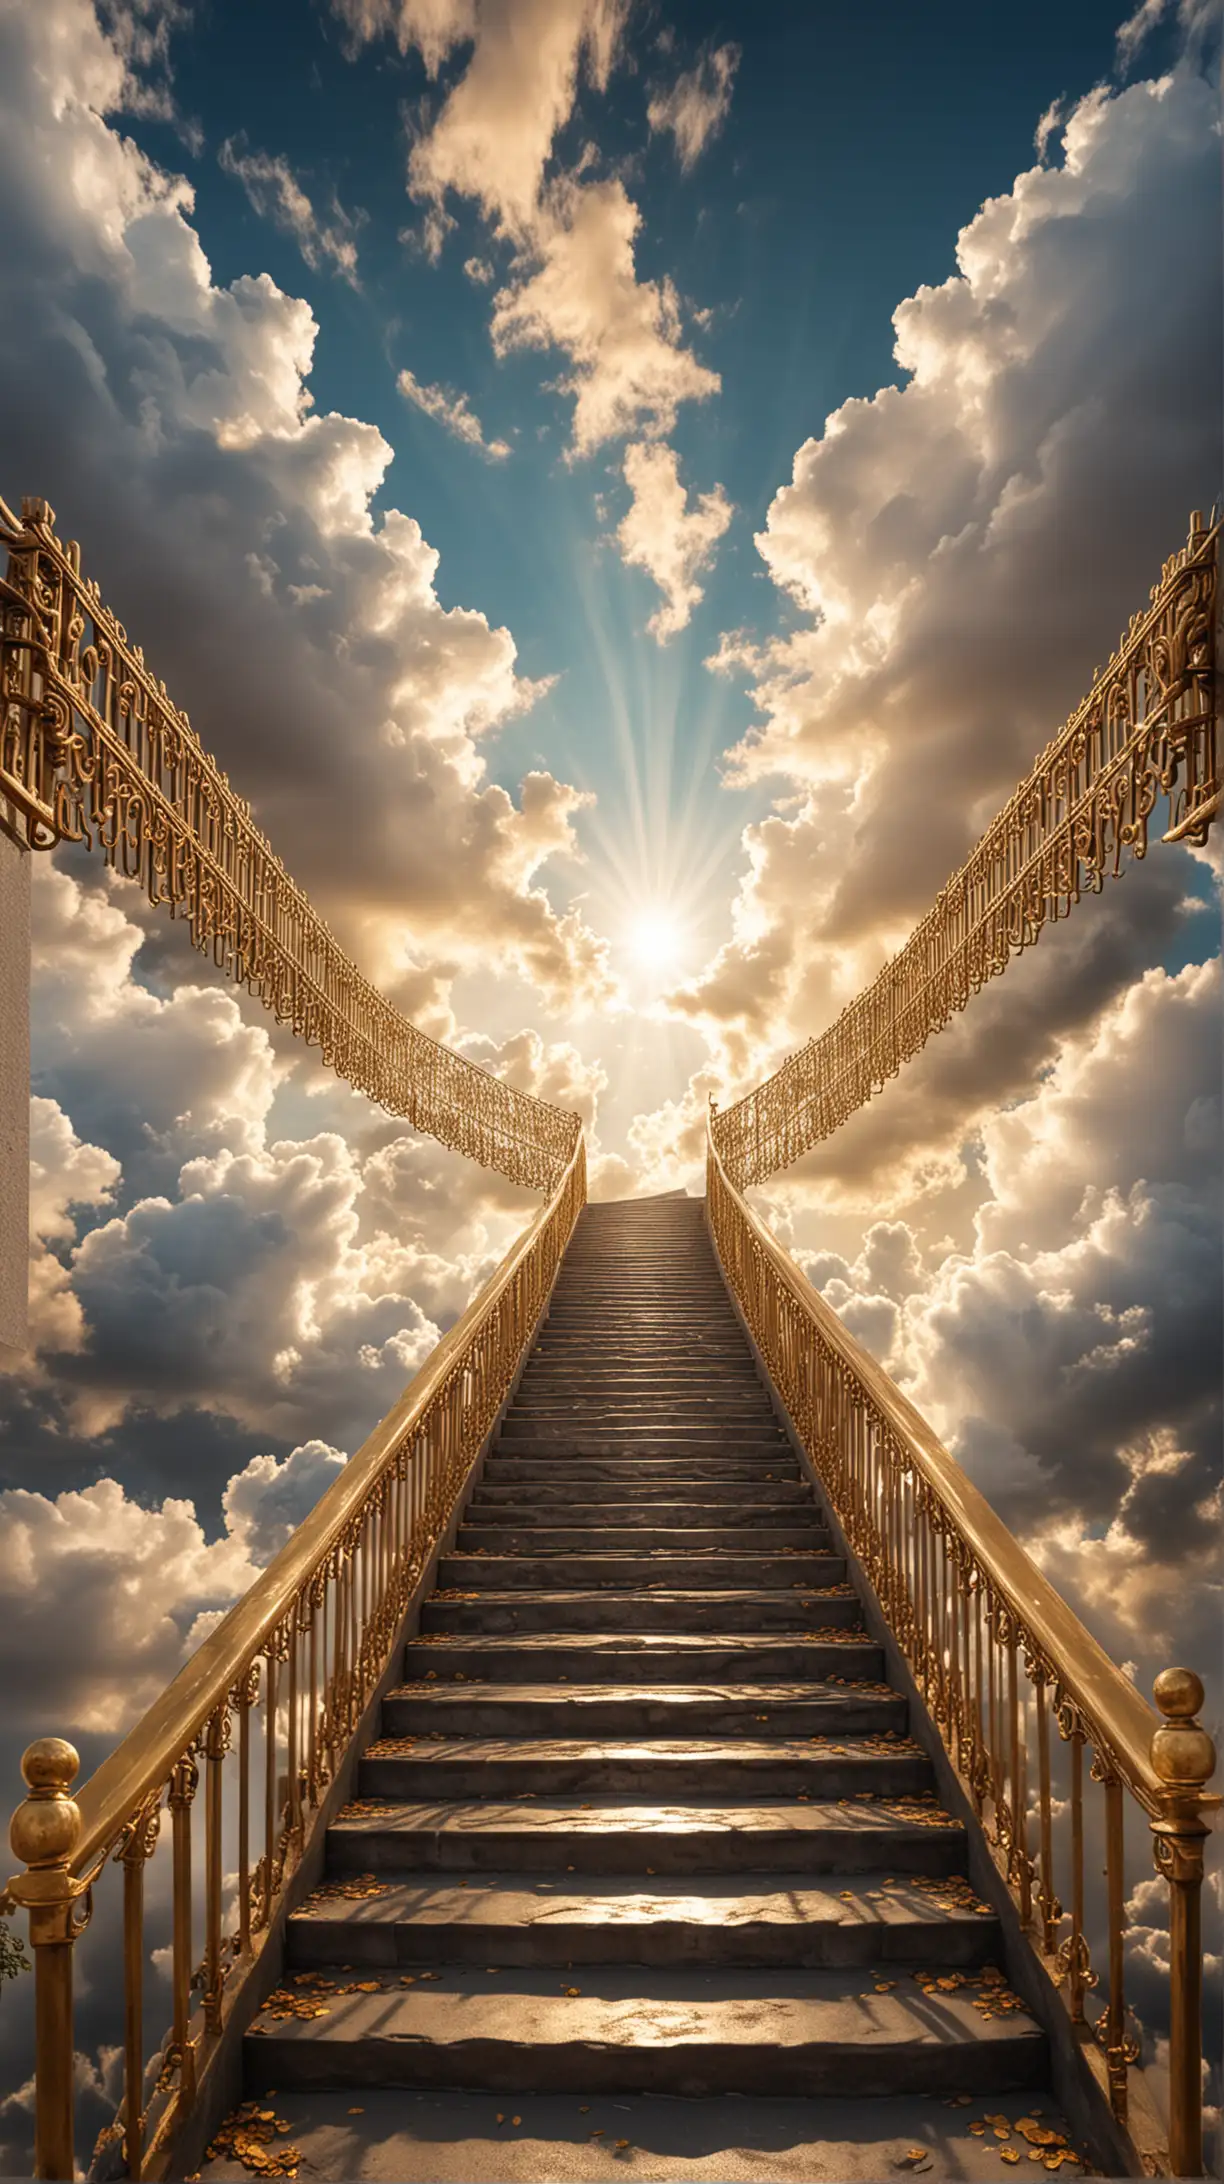 Golden Gates Stairway to Heaven Amidst Clouds